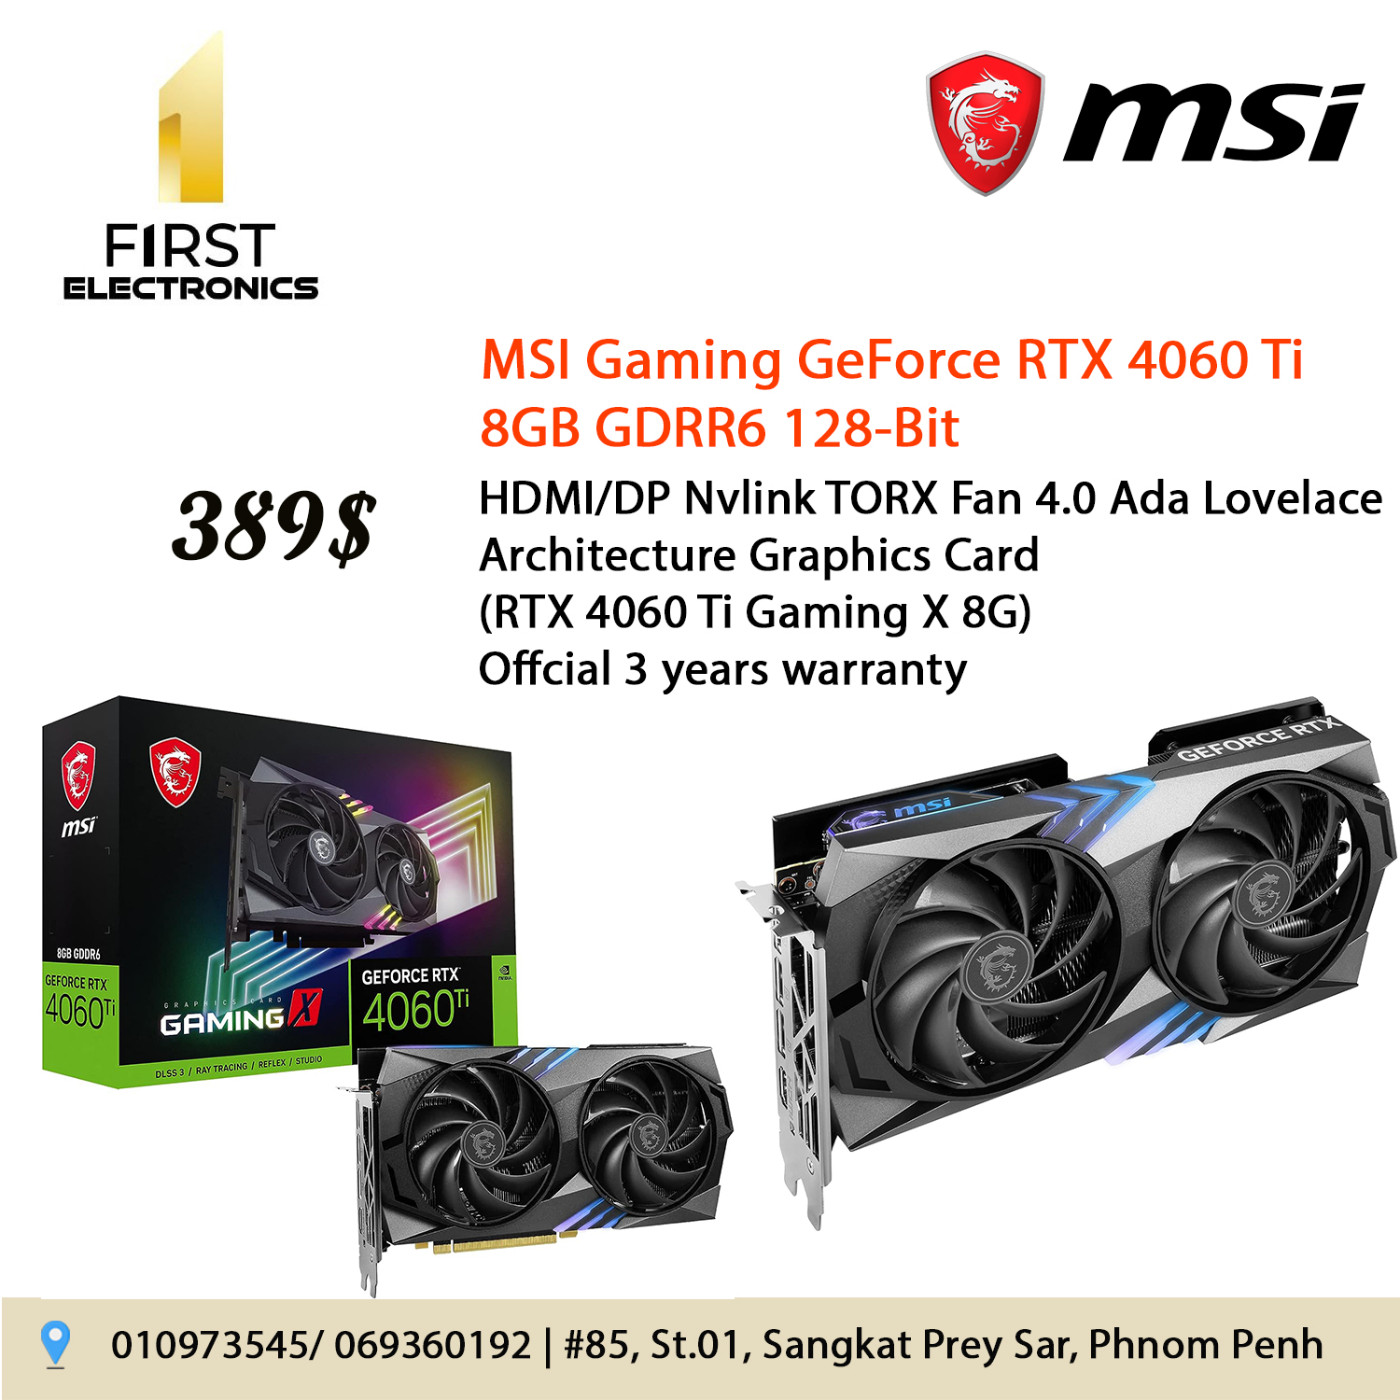  MSI Gaming GeForce RTX 4060 Ti 8GB GDRR6 128-Bit HDMI